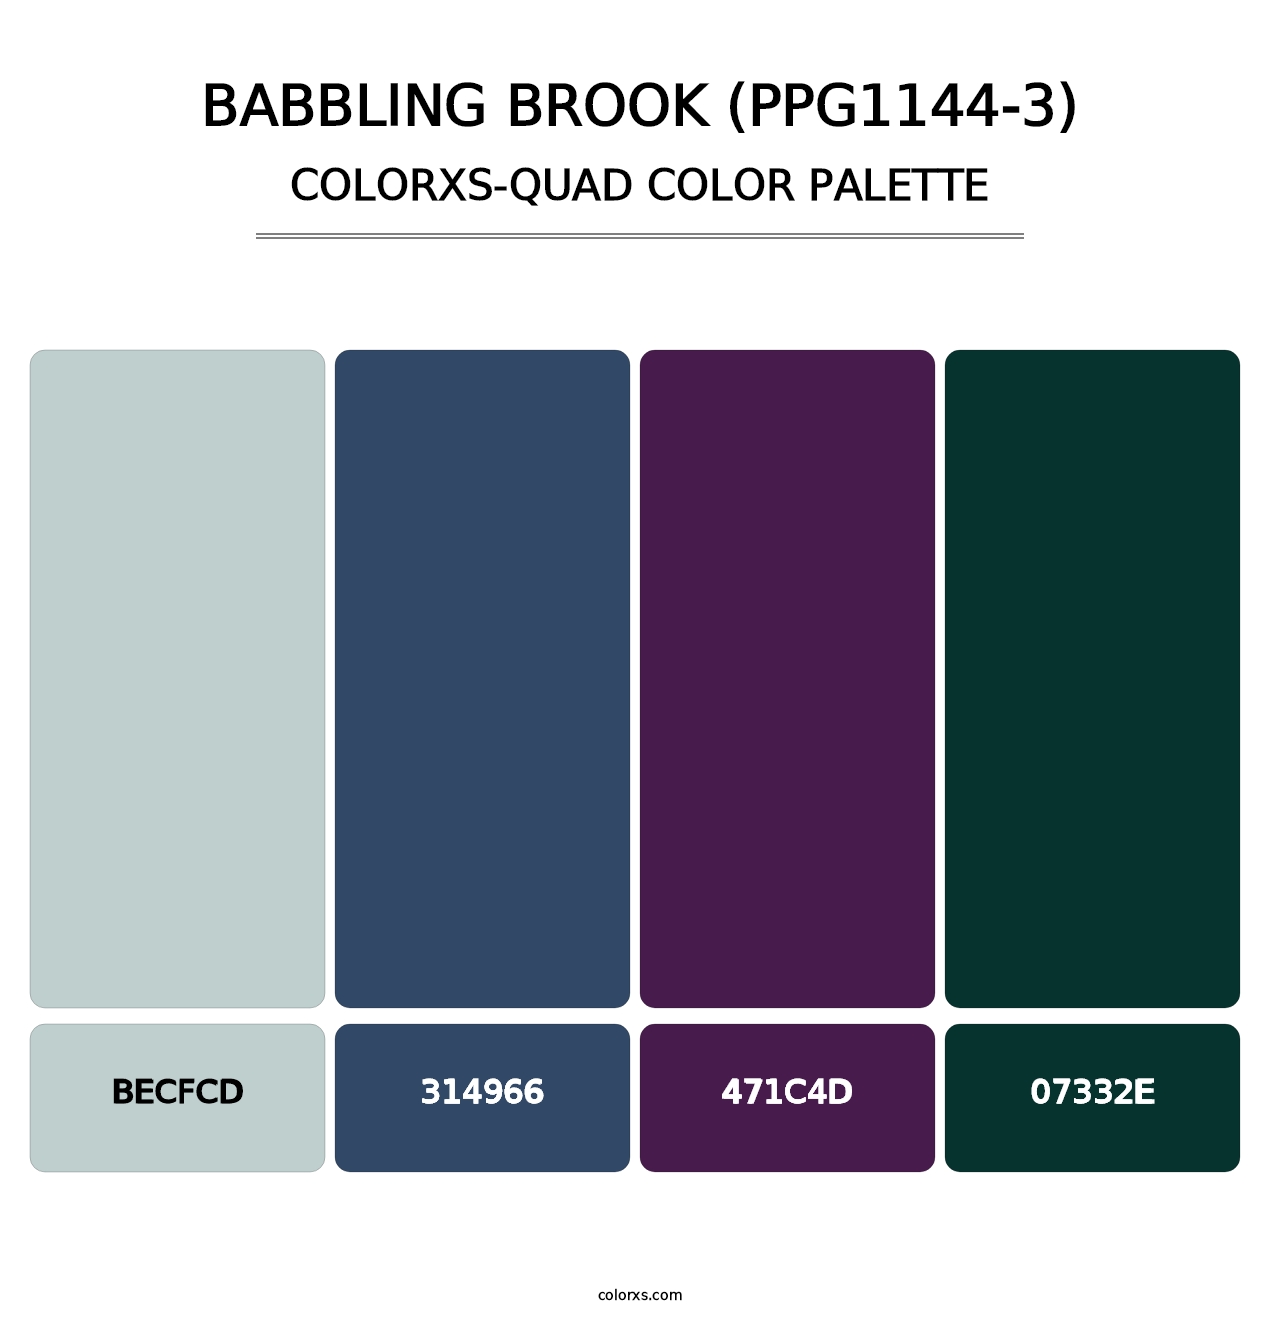 Babbling Brook (PPG1144-3) - Colorxs Quad Palette